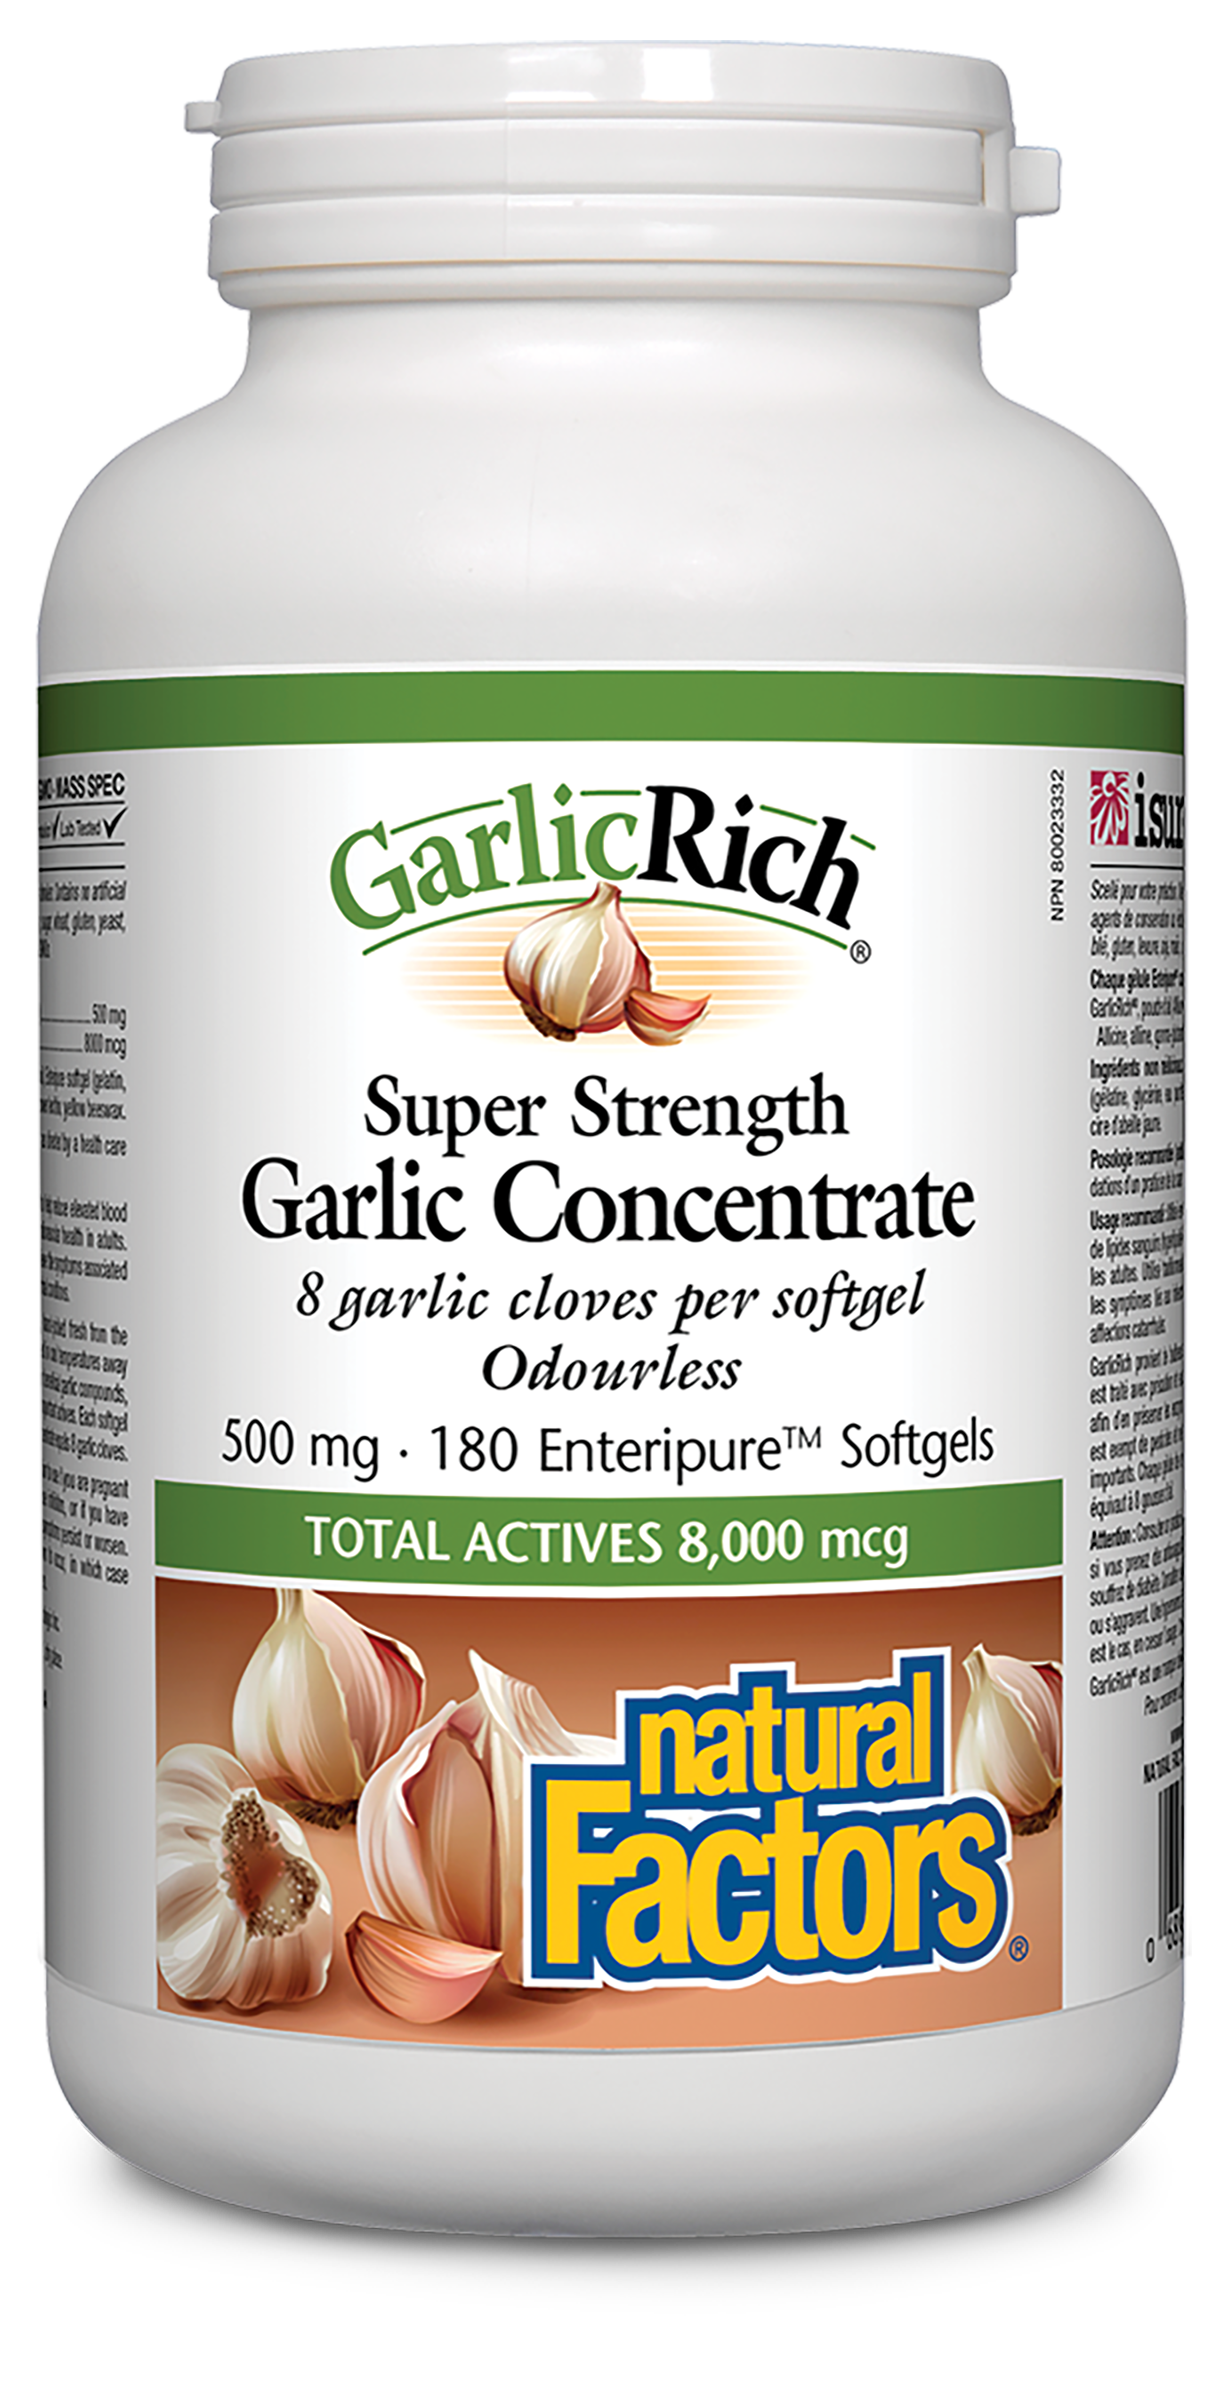 Natural Factors Garlicrich Super Strength Garlic Concentrate 500mg 180 Softgels